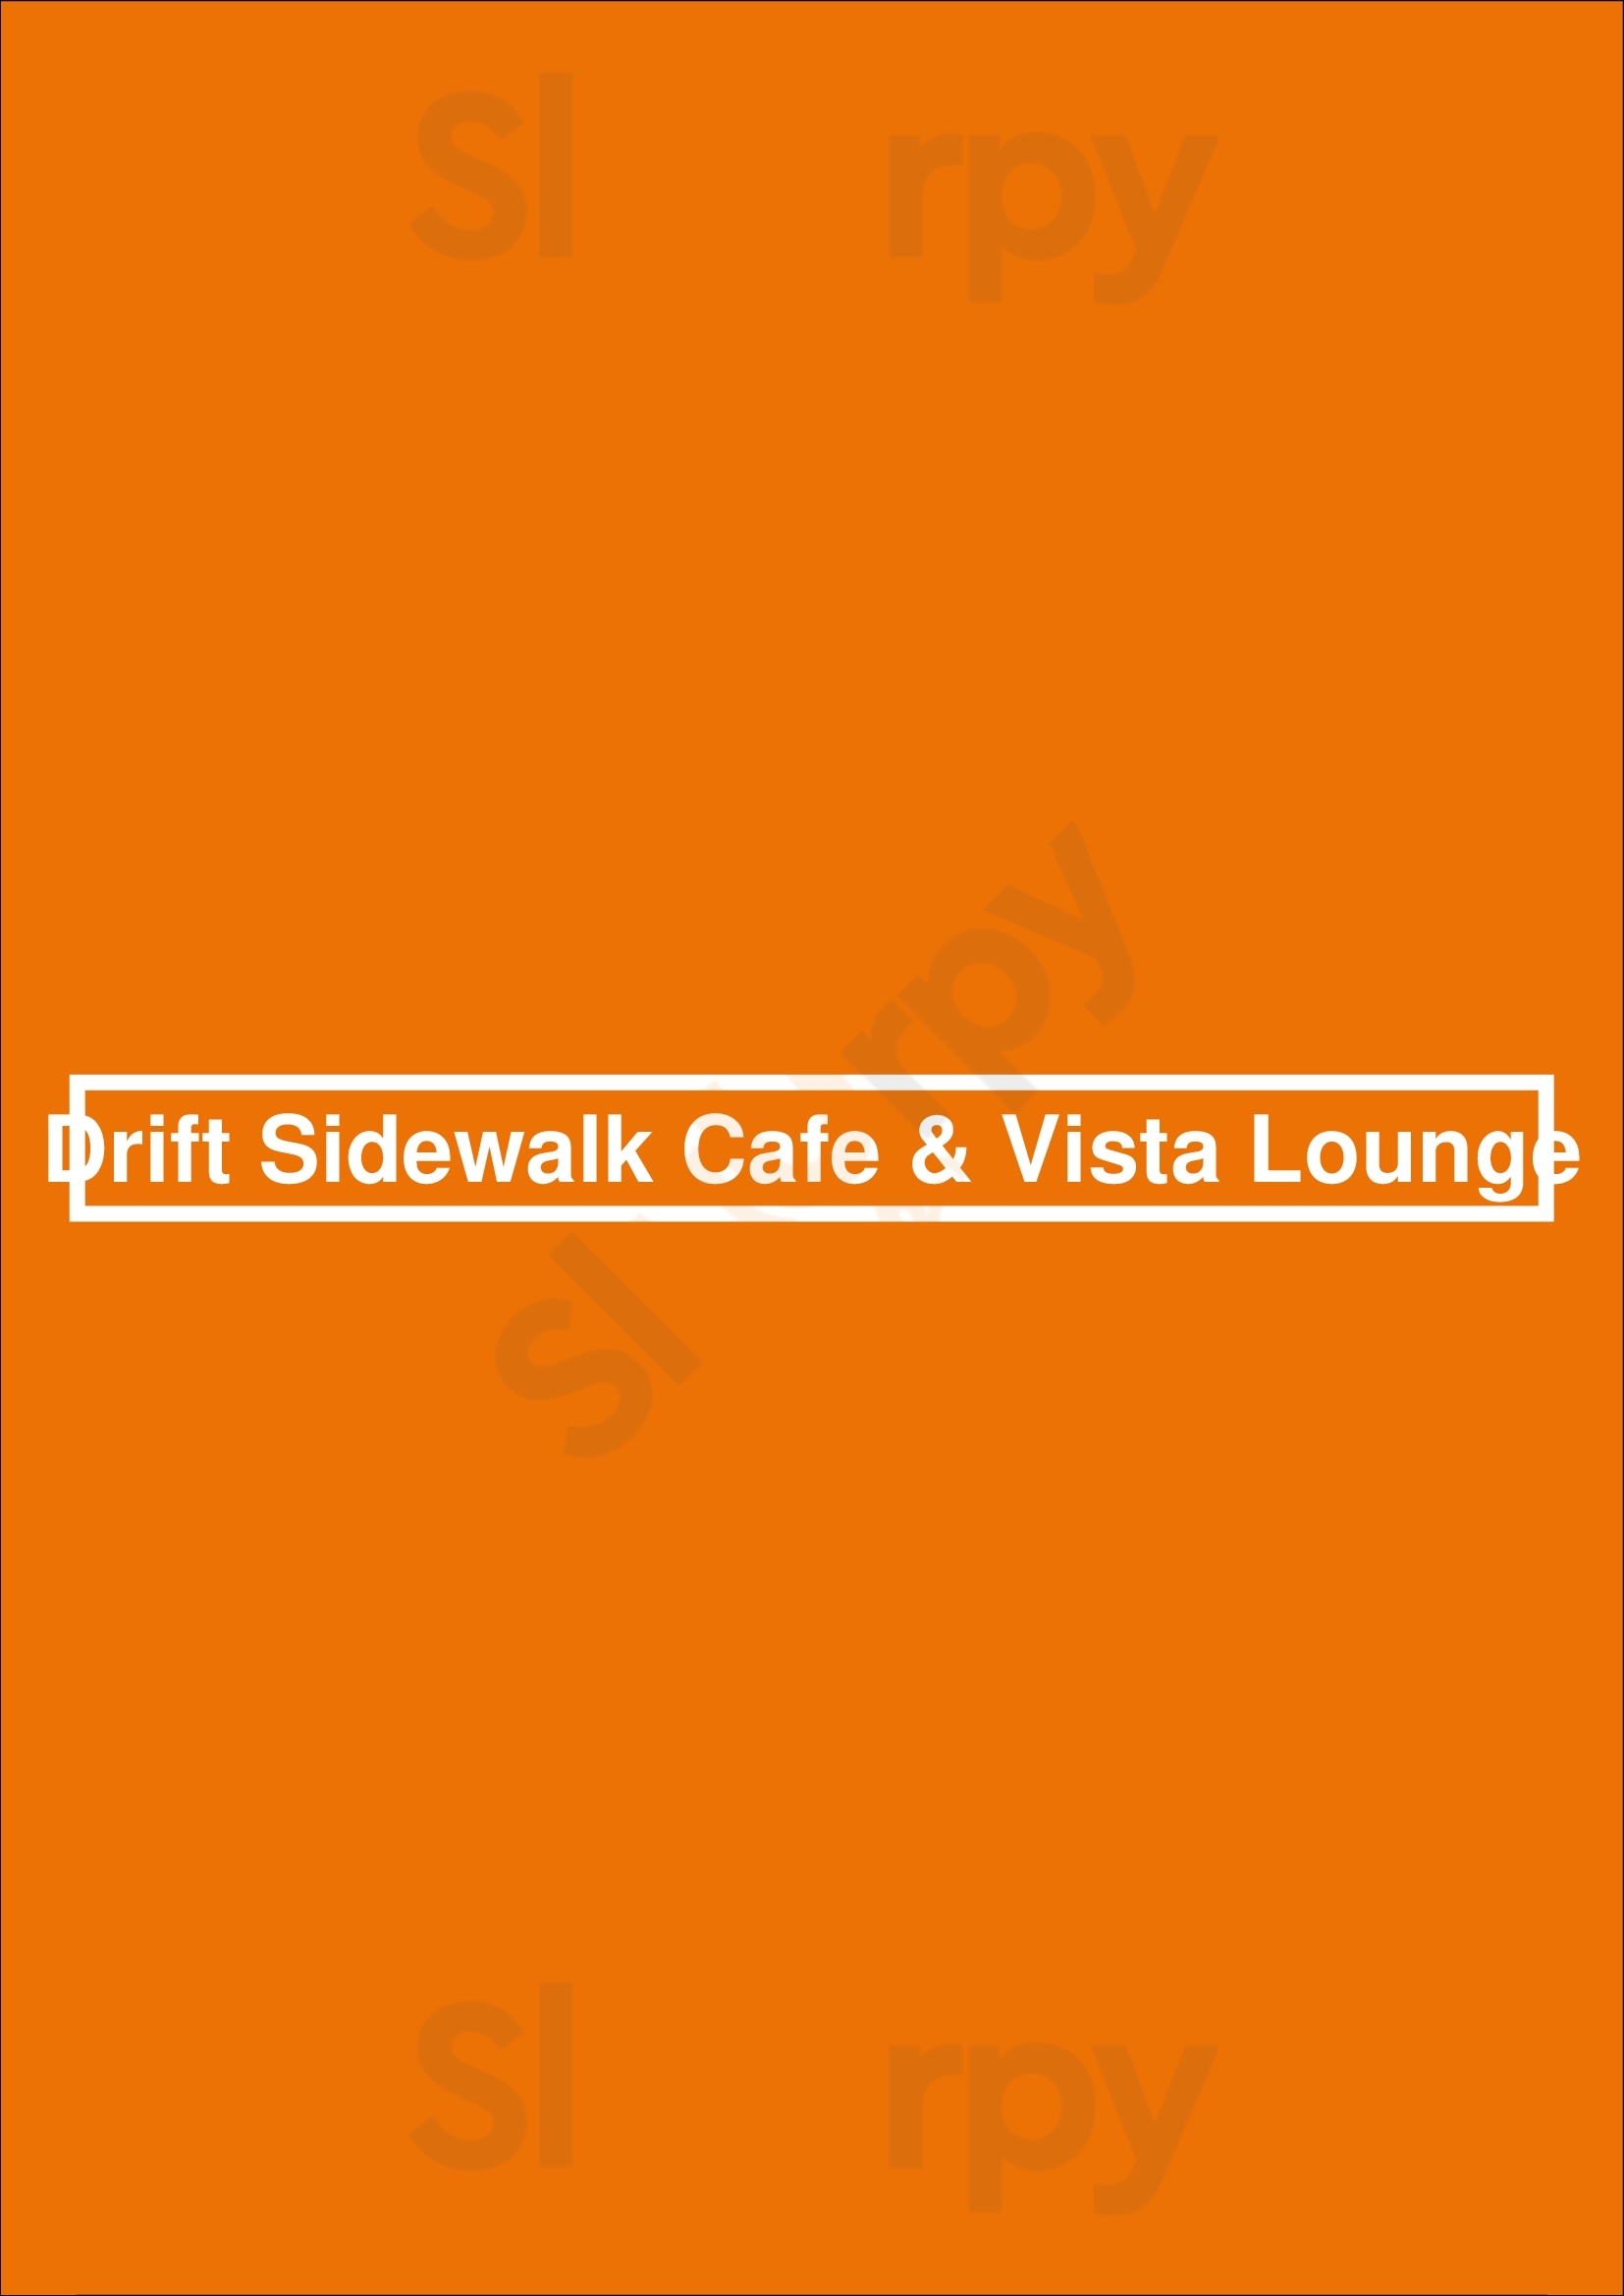 Drift Sidewalk Cafe & Vista Lounge Saskatoon Menu - 1